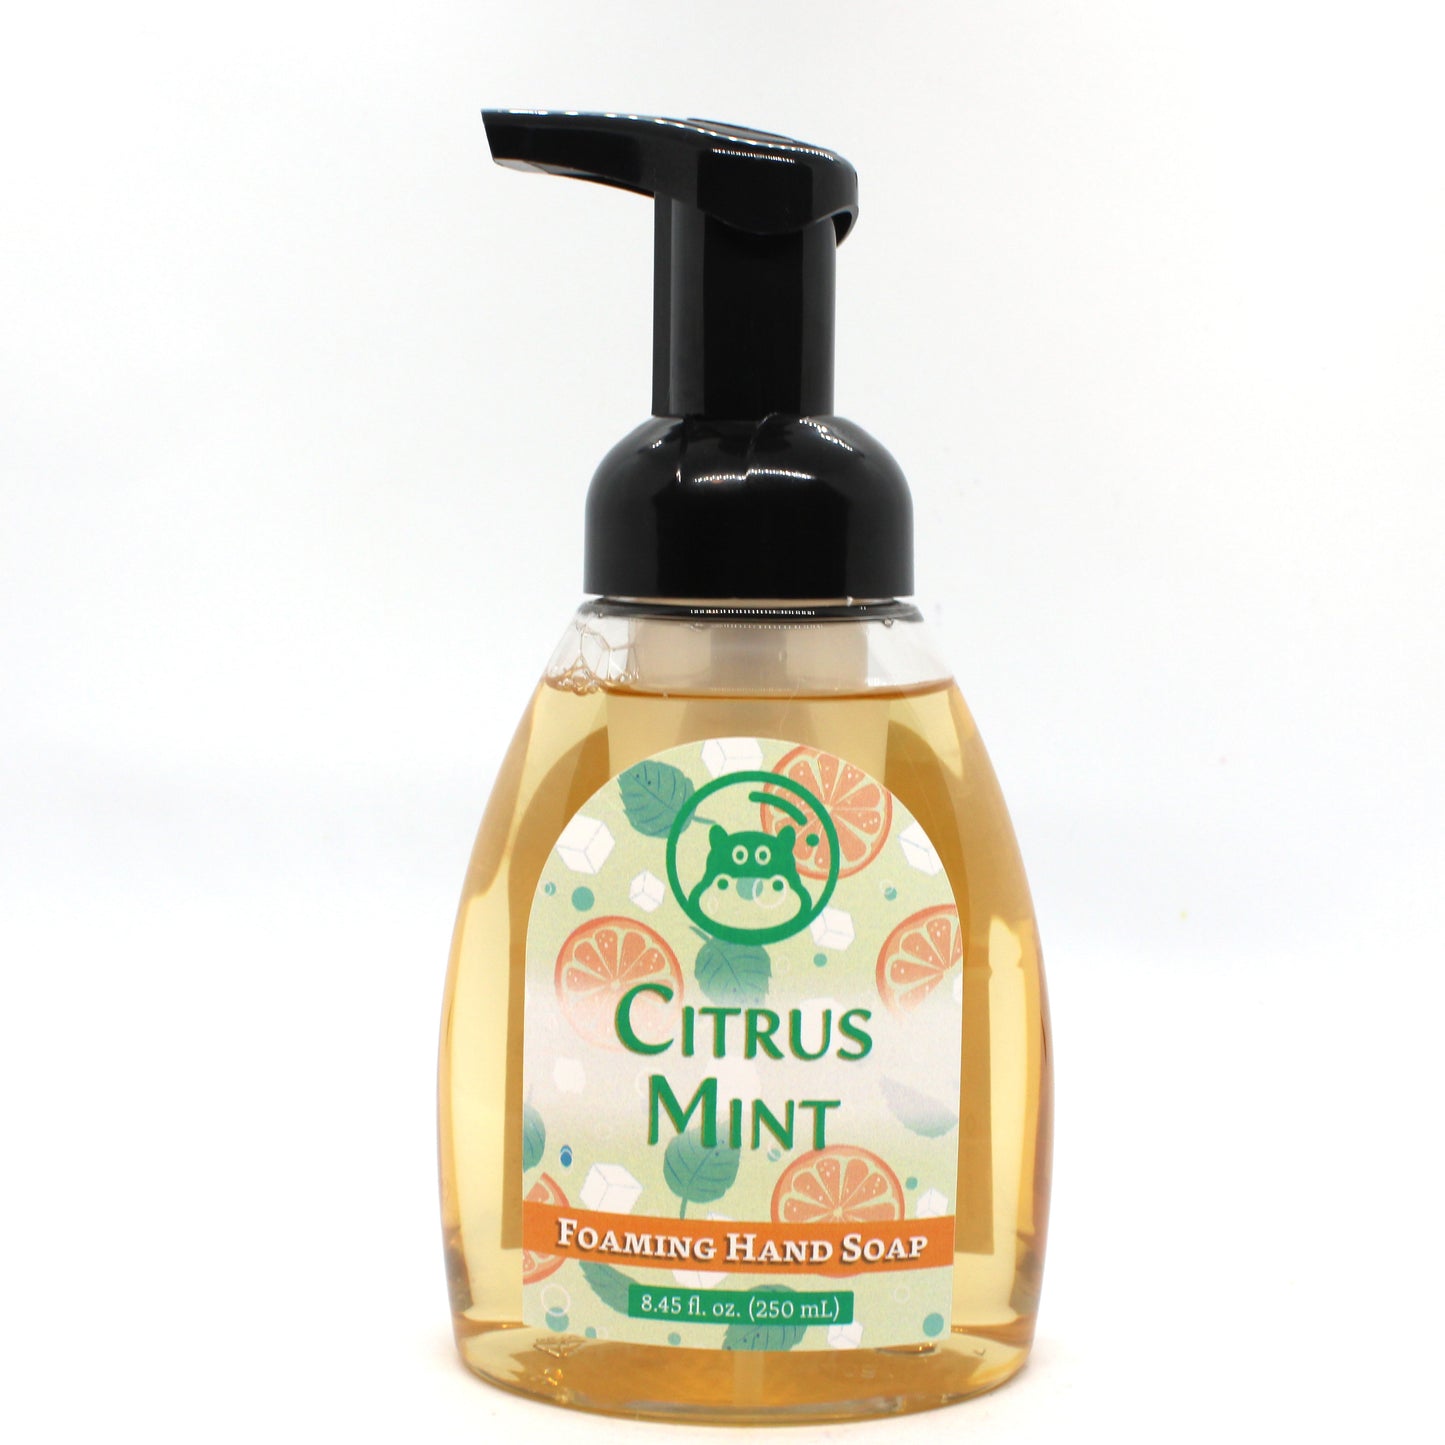 Citrus Mint Foaming Hand Soap (250 ml)